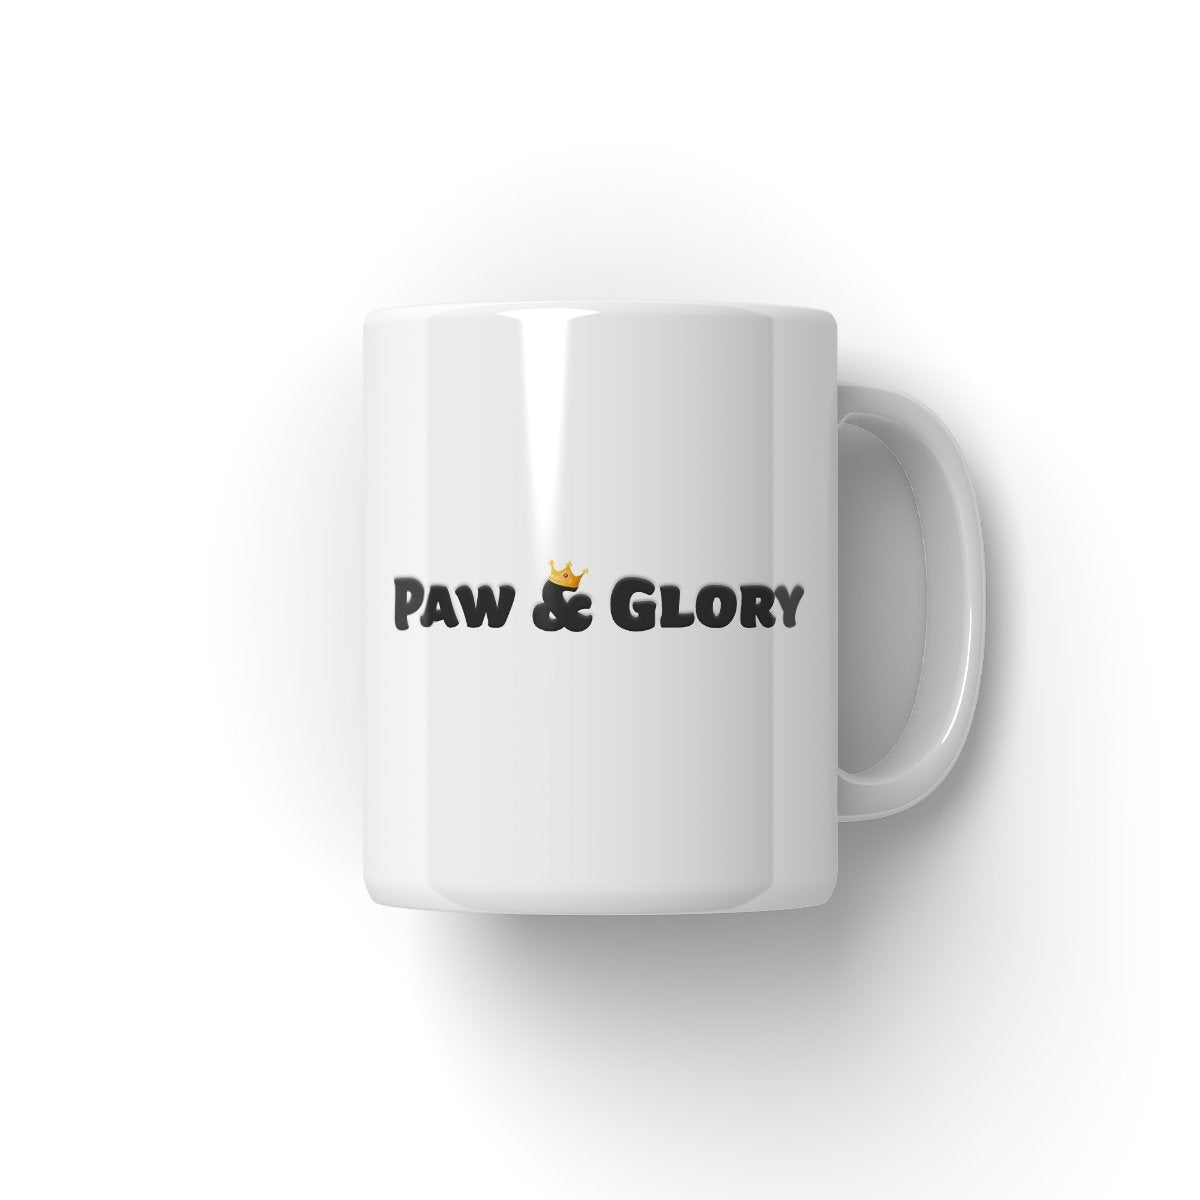 His Highness: Custom Pet Mug - Paw & Glory - #pet portraits# - #dog portraits# - #pet portraits uk#paw and glory, pet portraits Mug,coffee mugs personalized, dog print mug, man and dog mug, me and my dog mug, dog and cat mugs